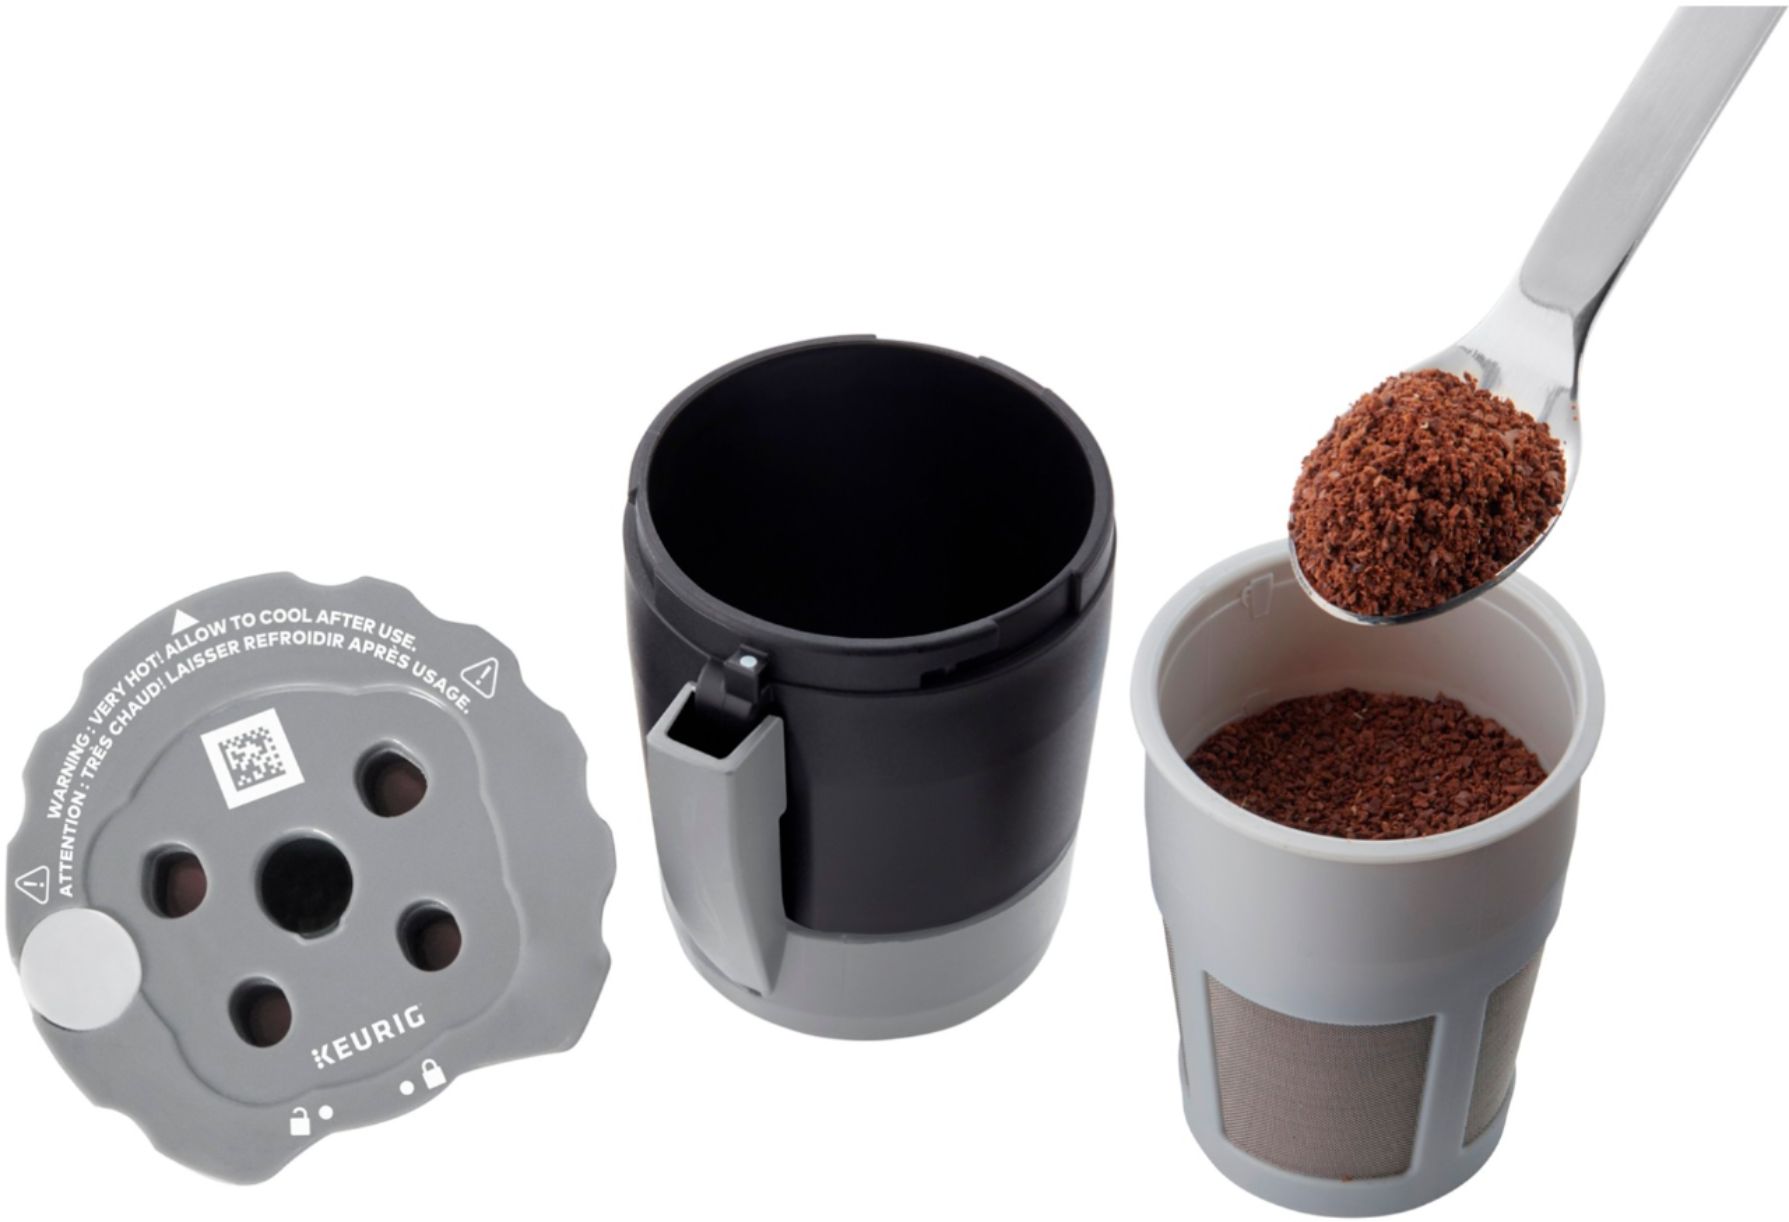 Keurig My K-Cup Universal Reusable Coffee Filter for sale online 